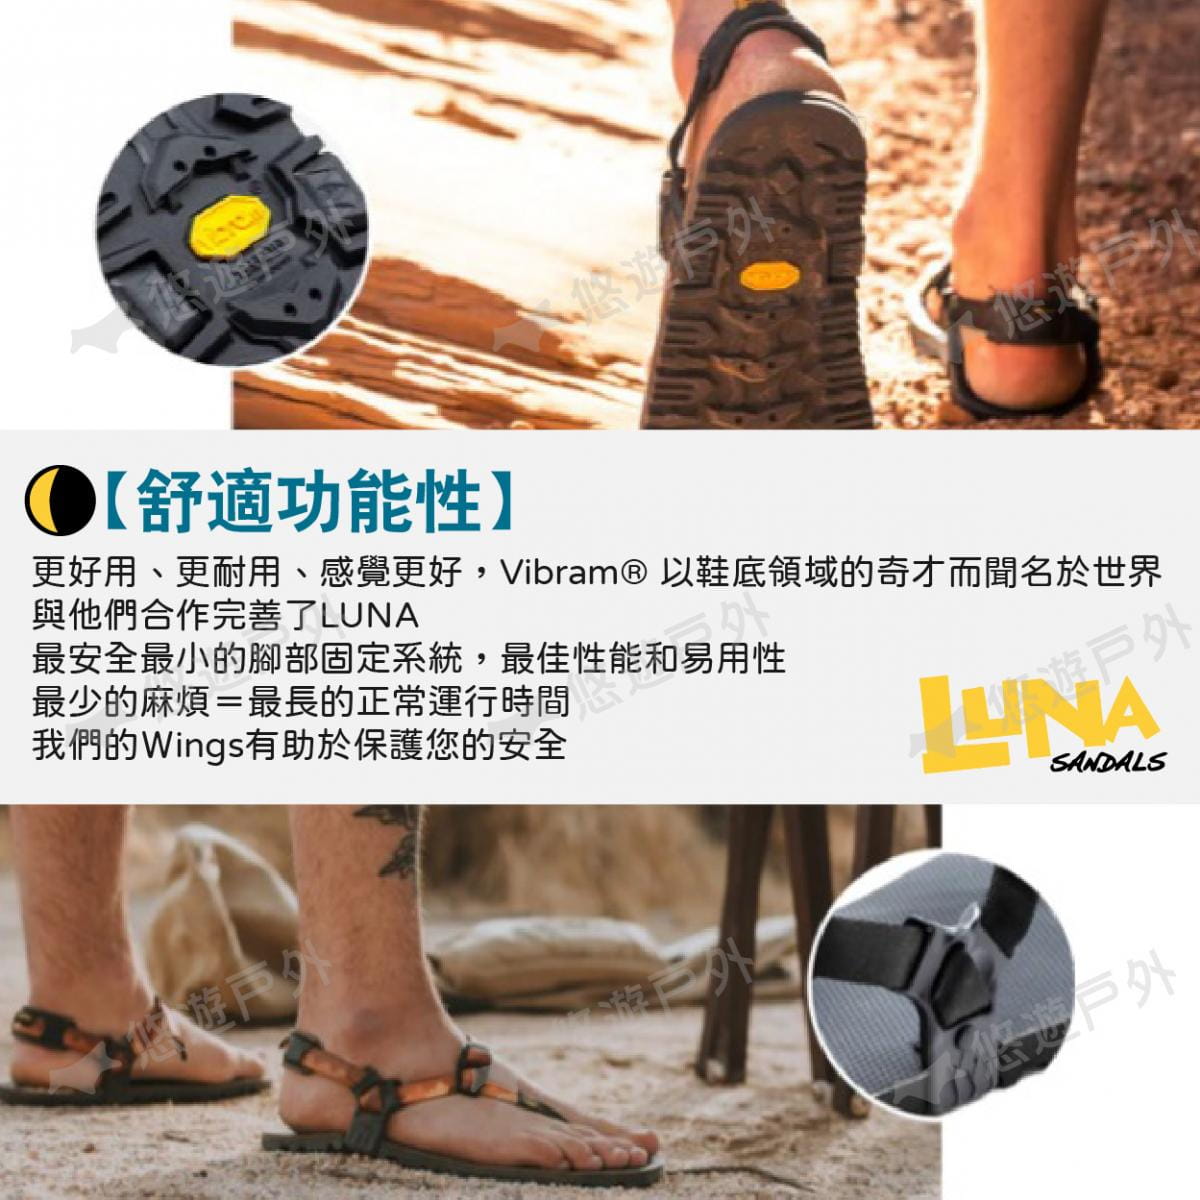 【Luna Sandals】Oso Flaco Winged 涼鞋 7mm款 悠遊戶外 7